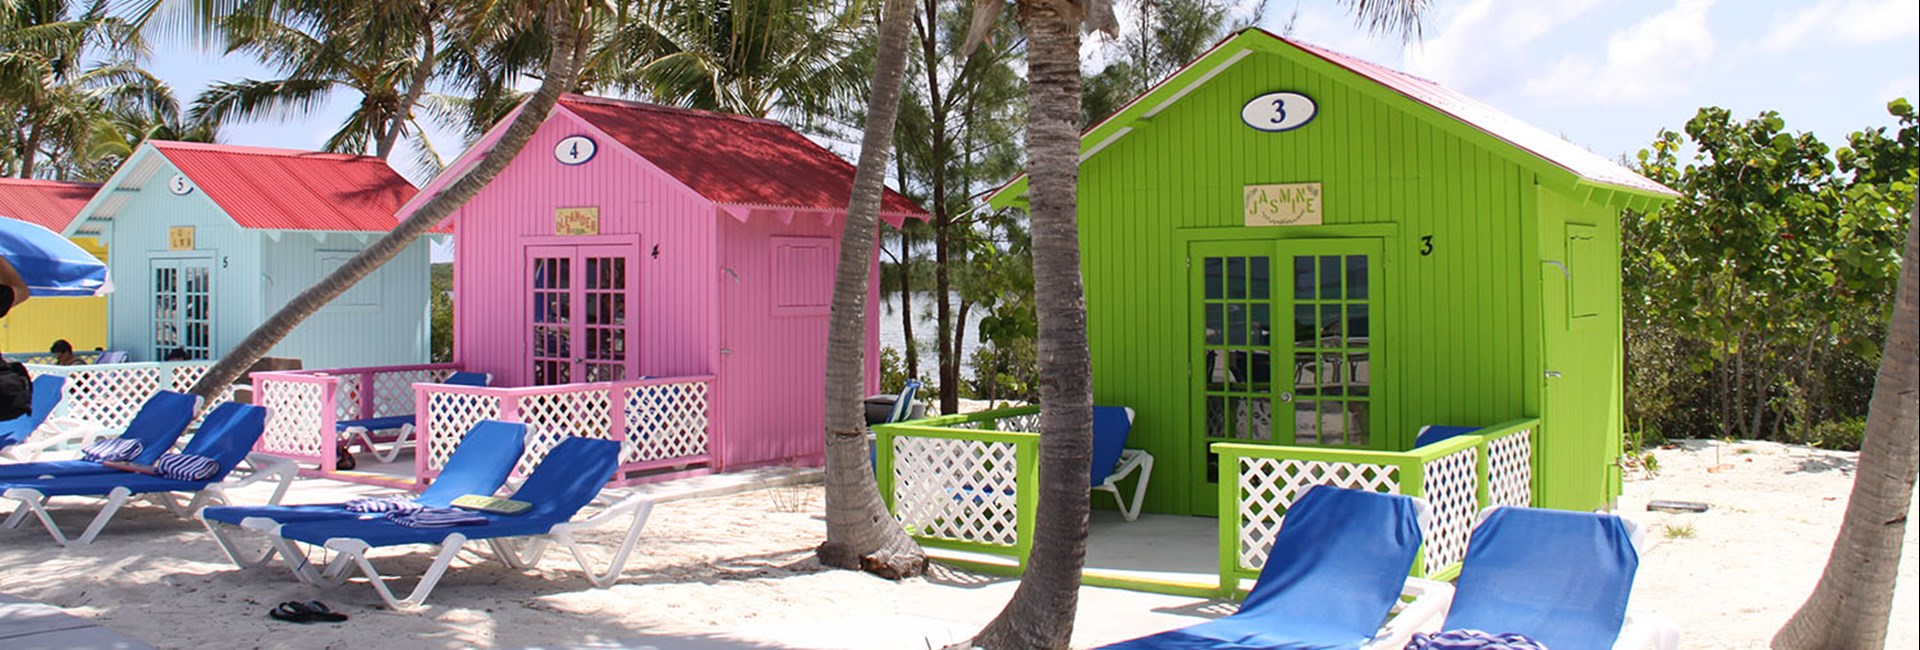 Colourful beach huts on the beach in the Bahamas